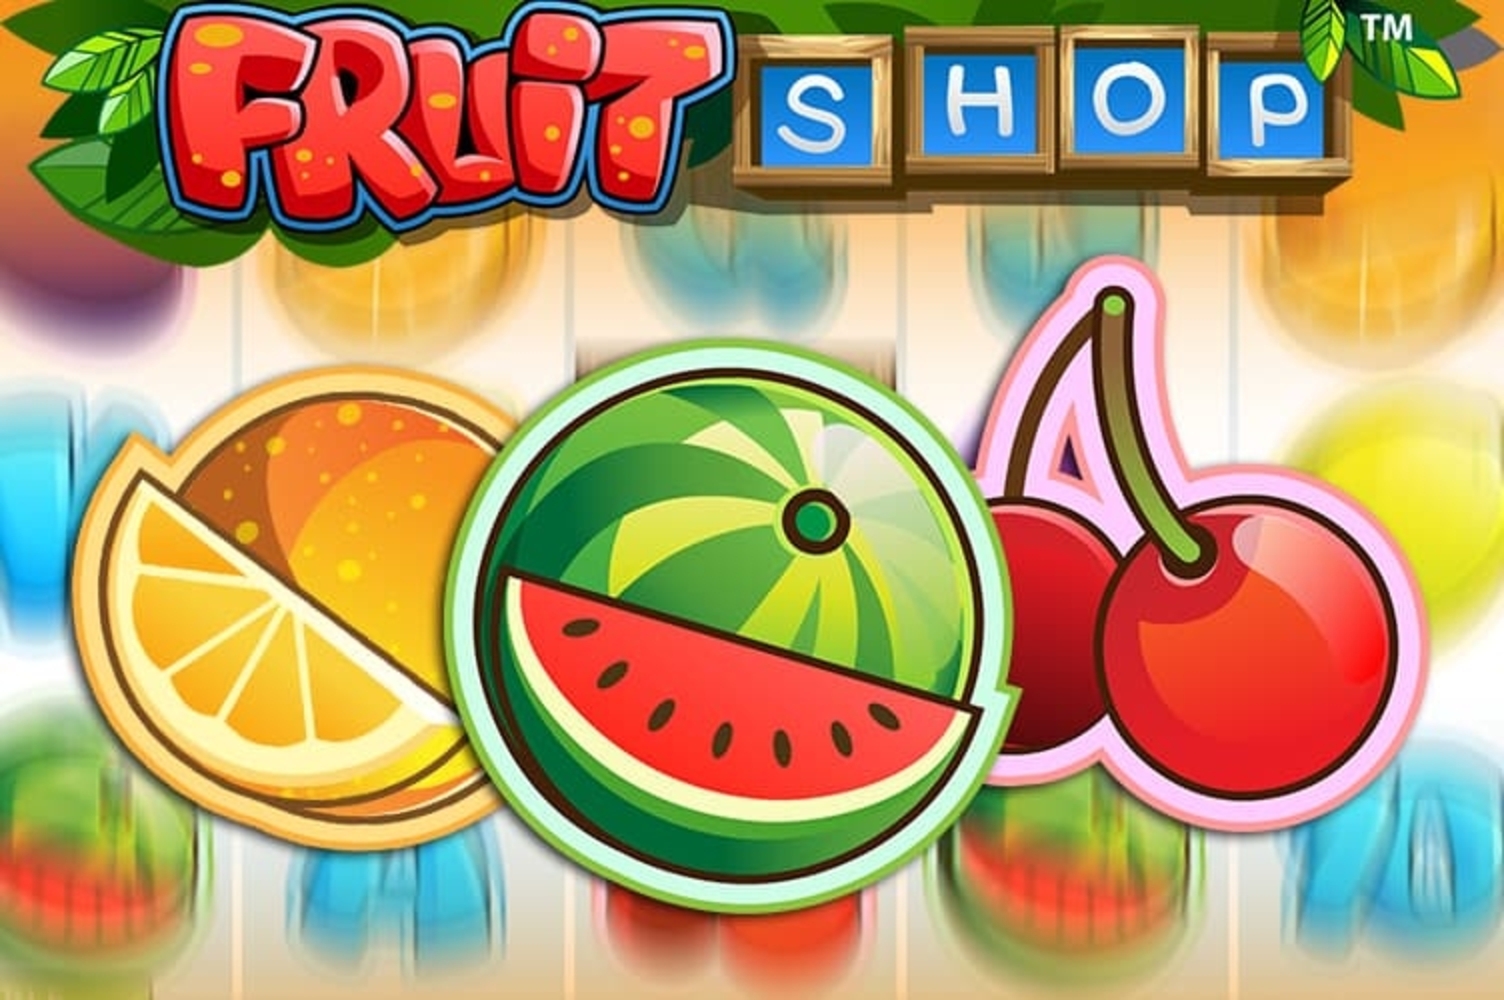 Fruit Shop demo